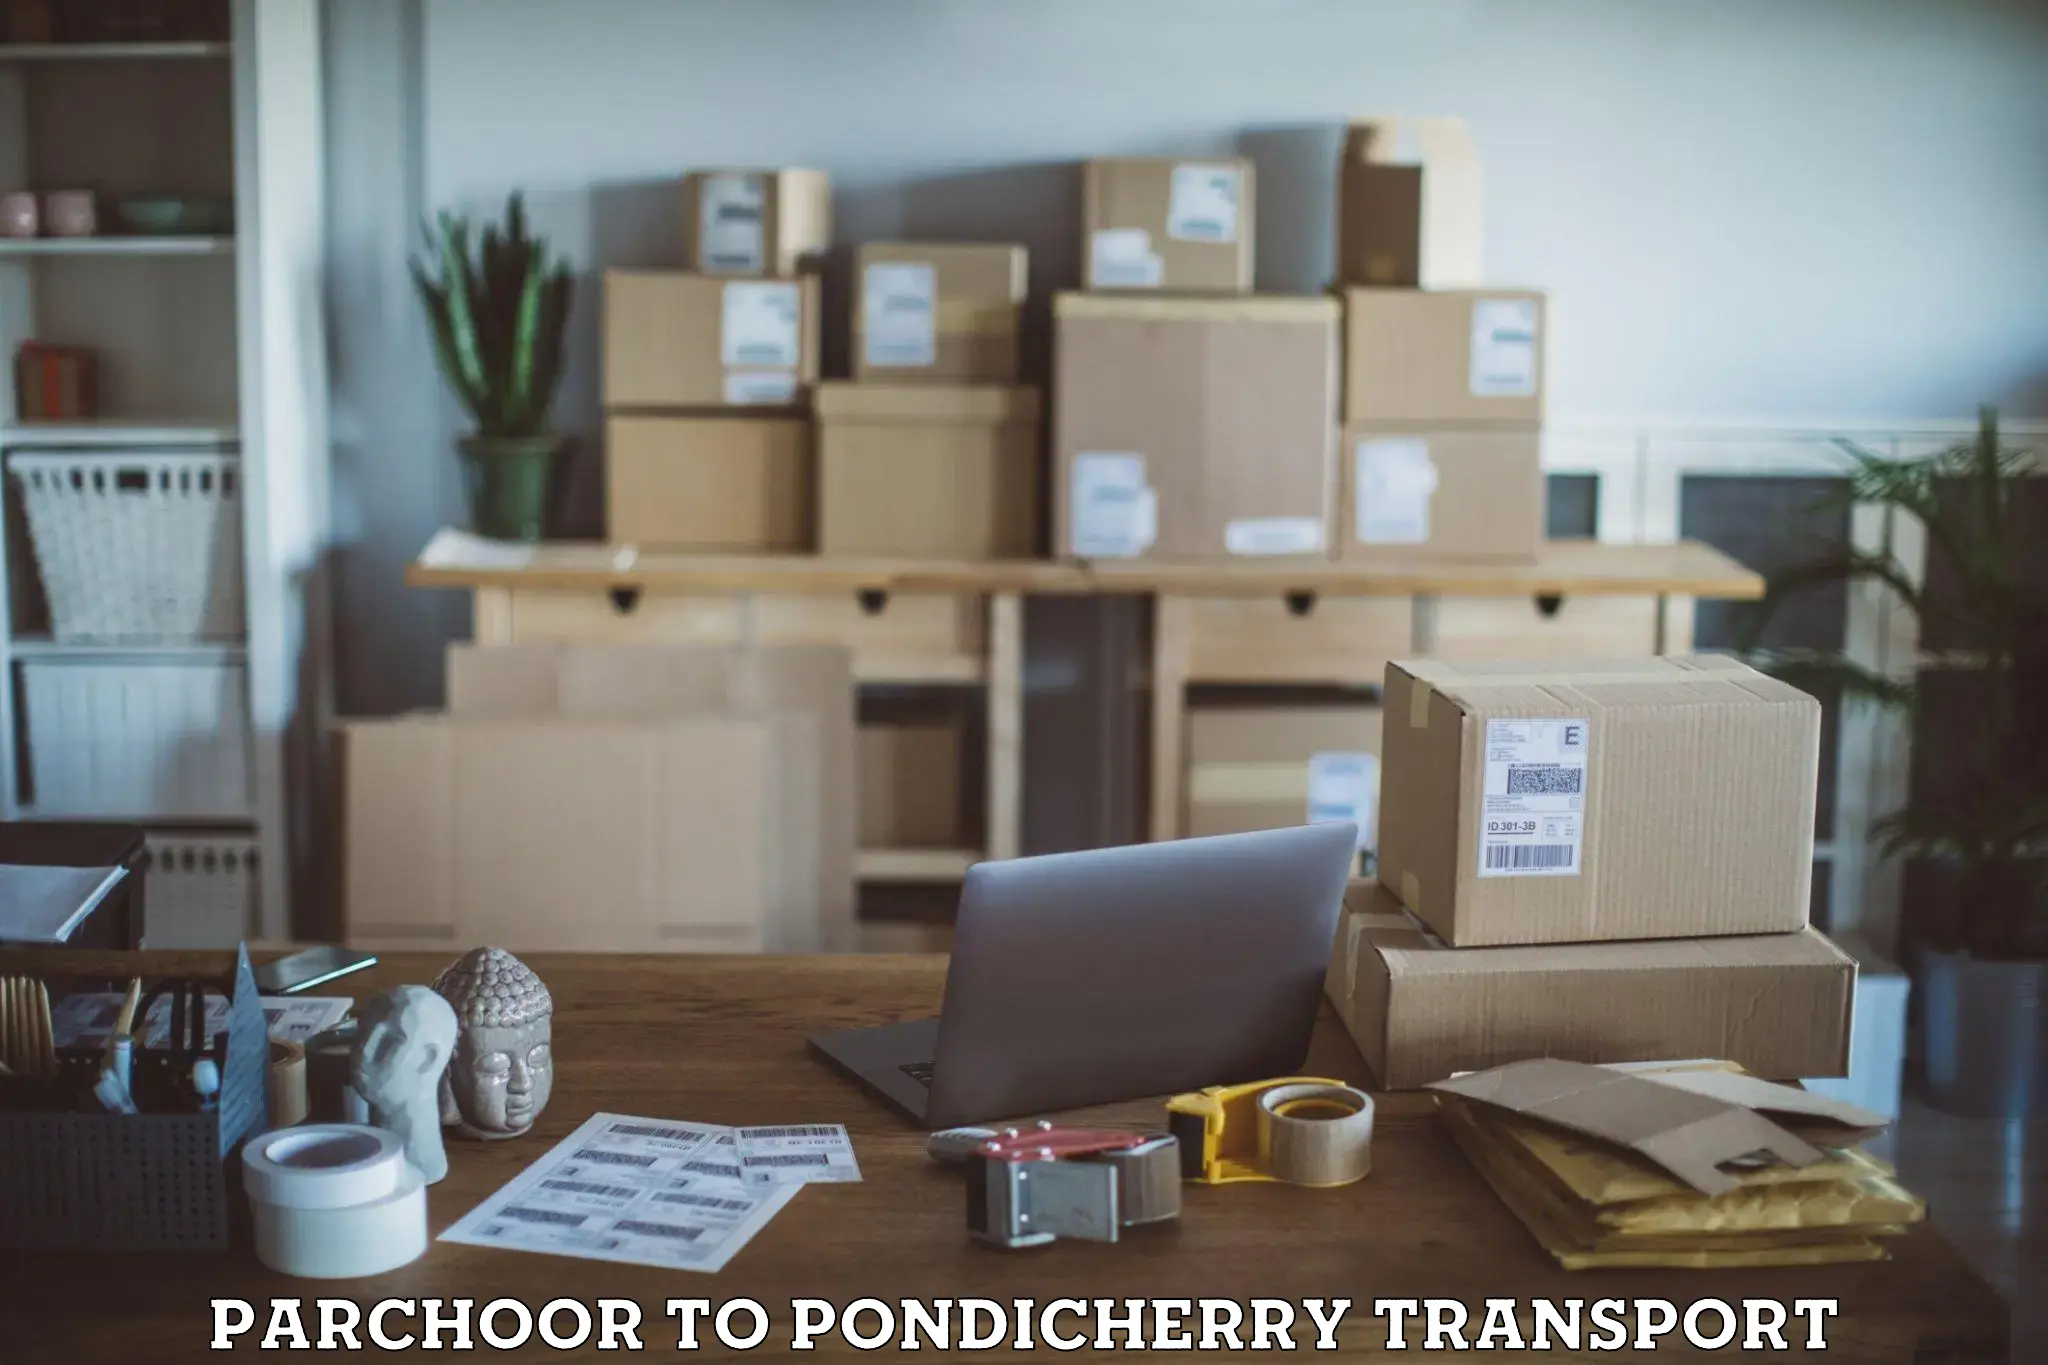 Lorry transport service Parchoor to Pondicherry University